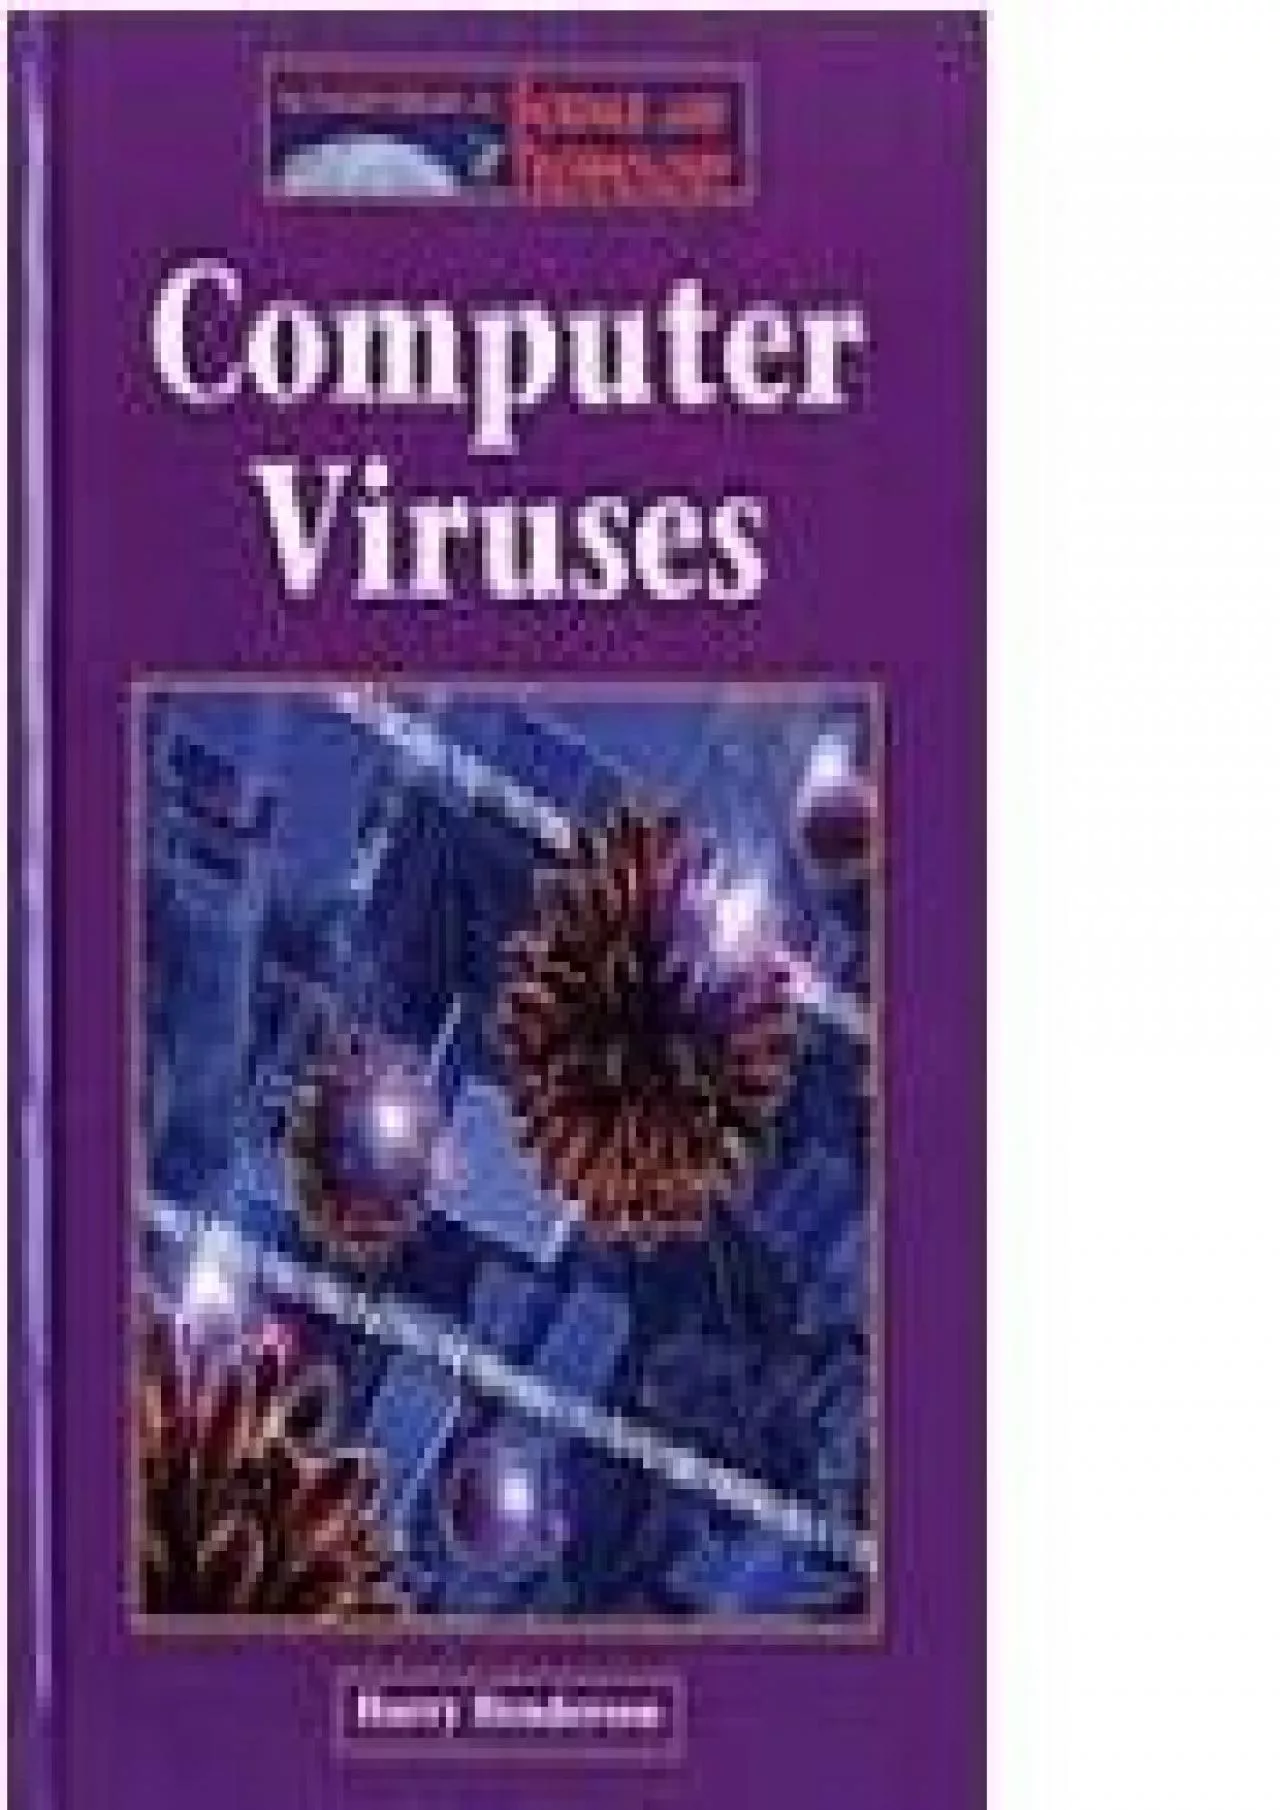 [FREE]-Computer Viruses